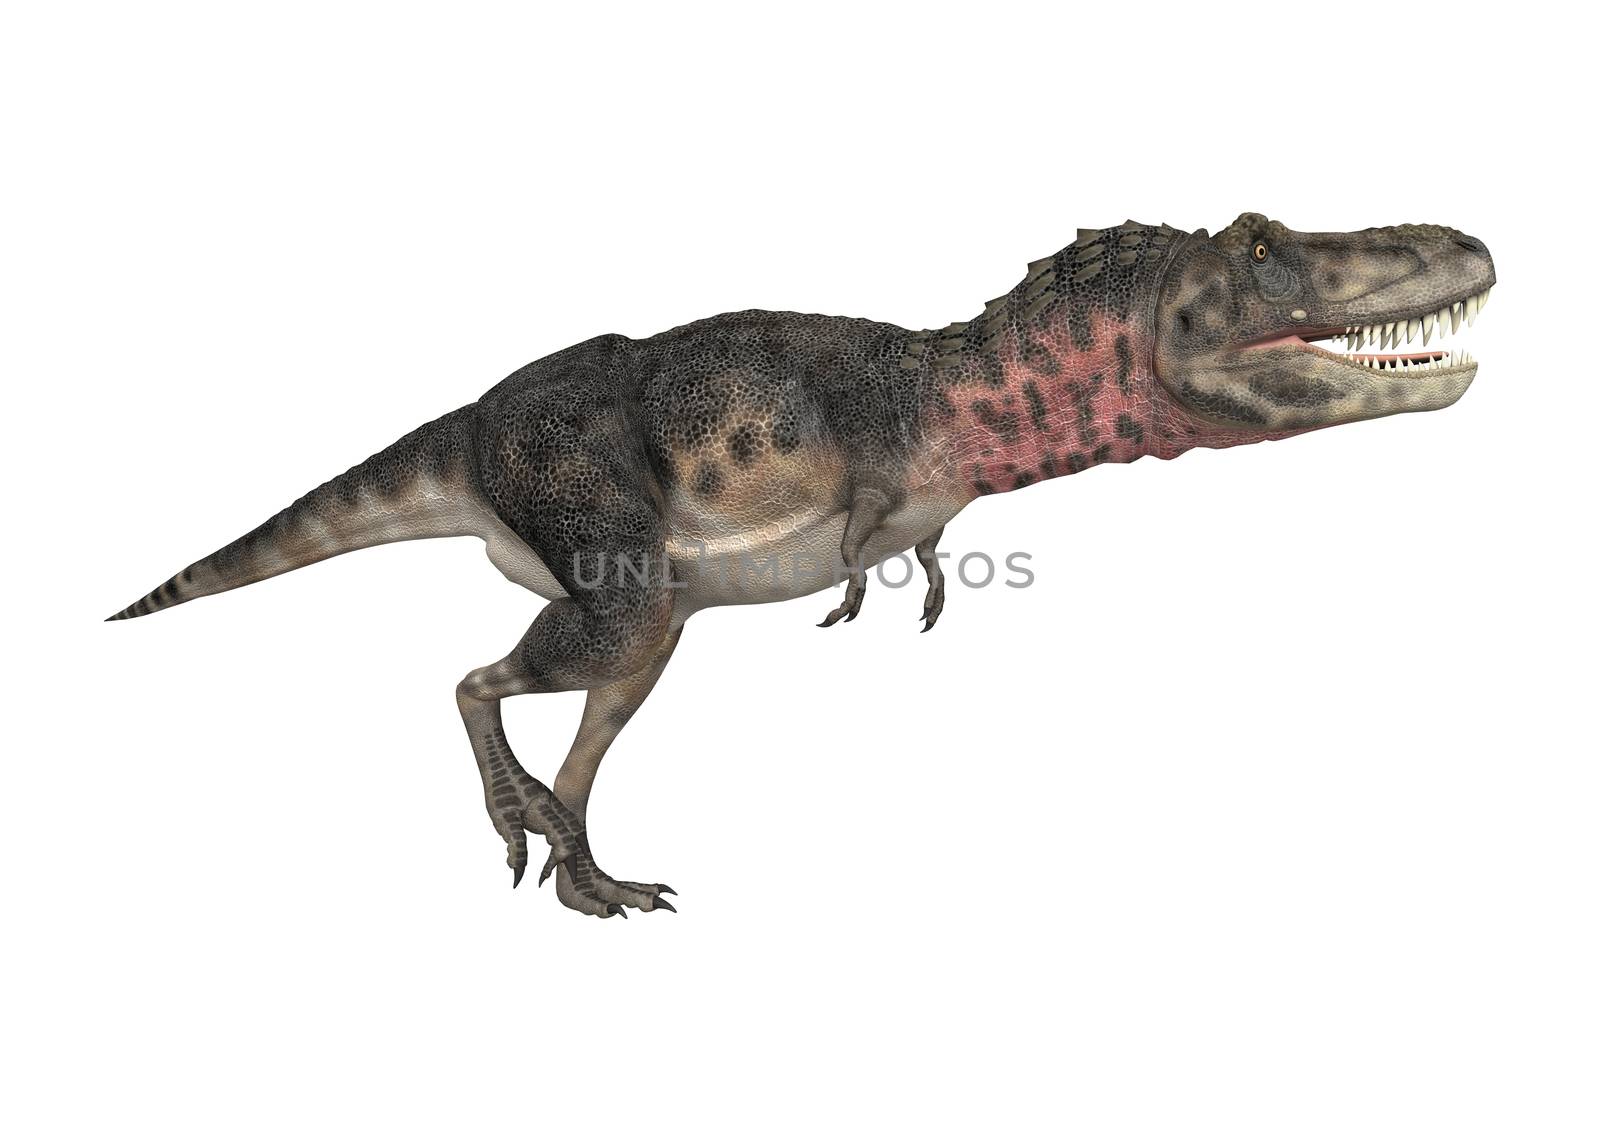 3D digital render of a dinosaur tarbosaurus walking isolated on white background